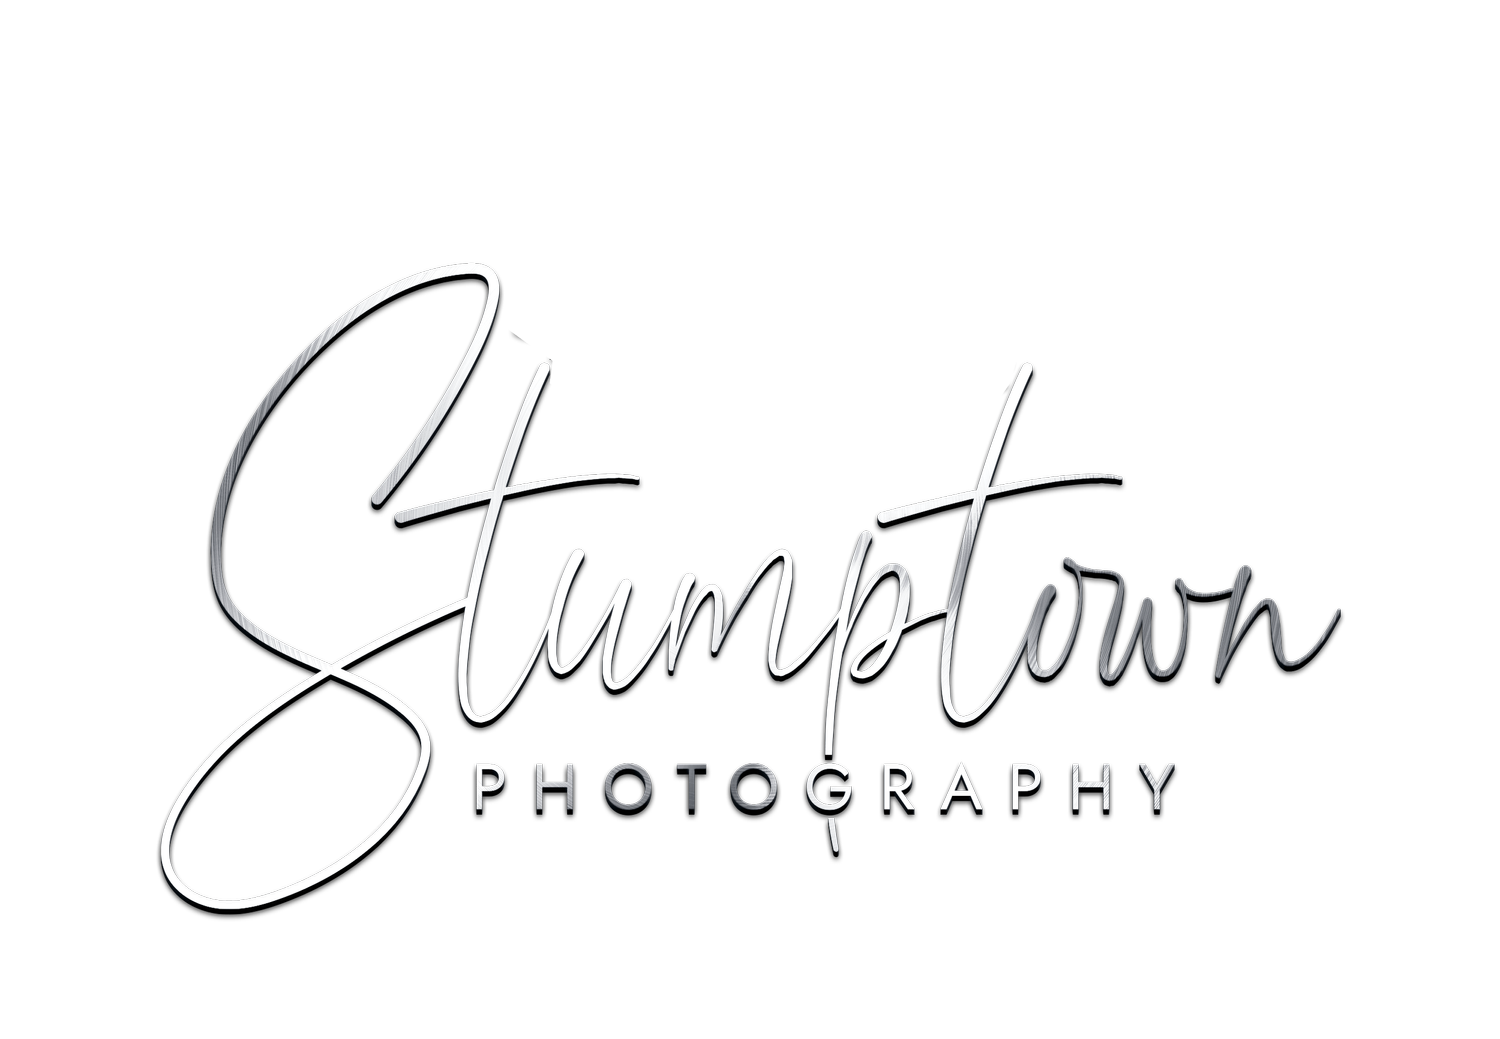 Stumptown Photography